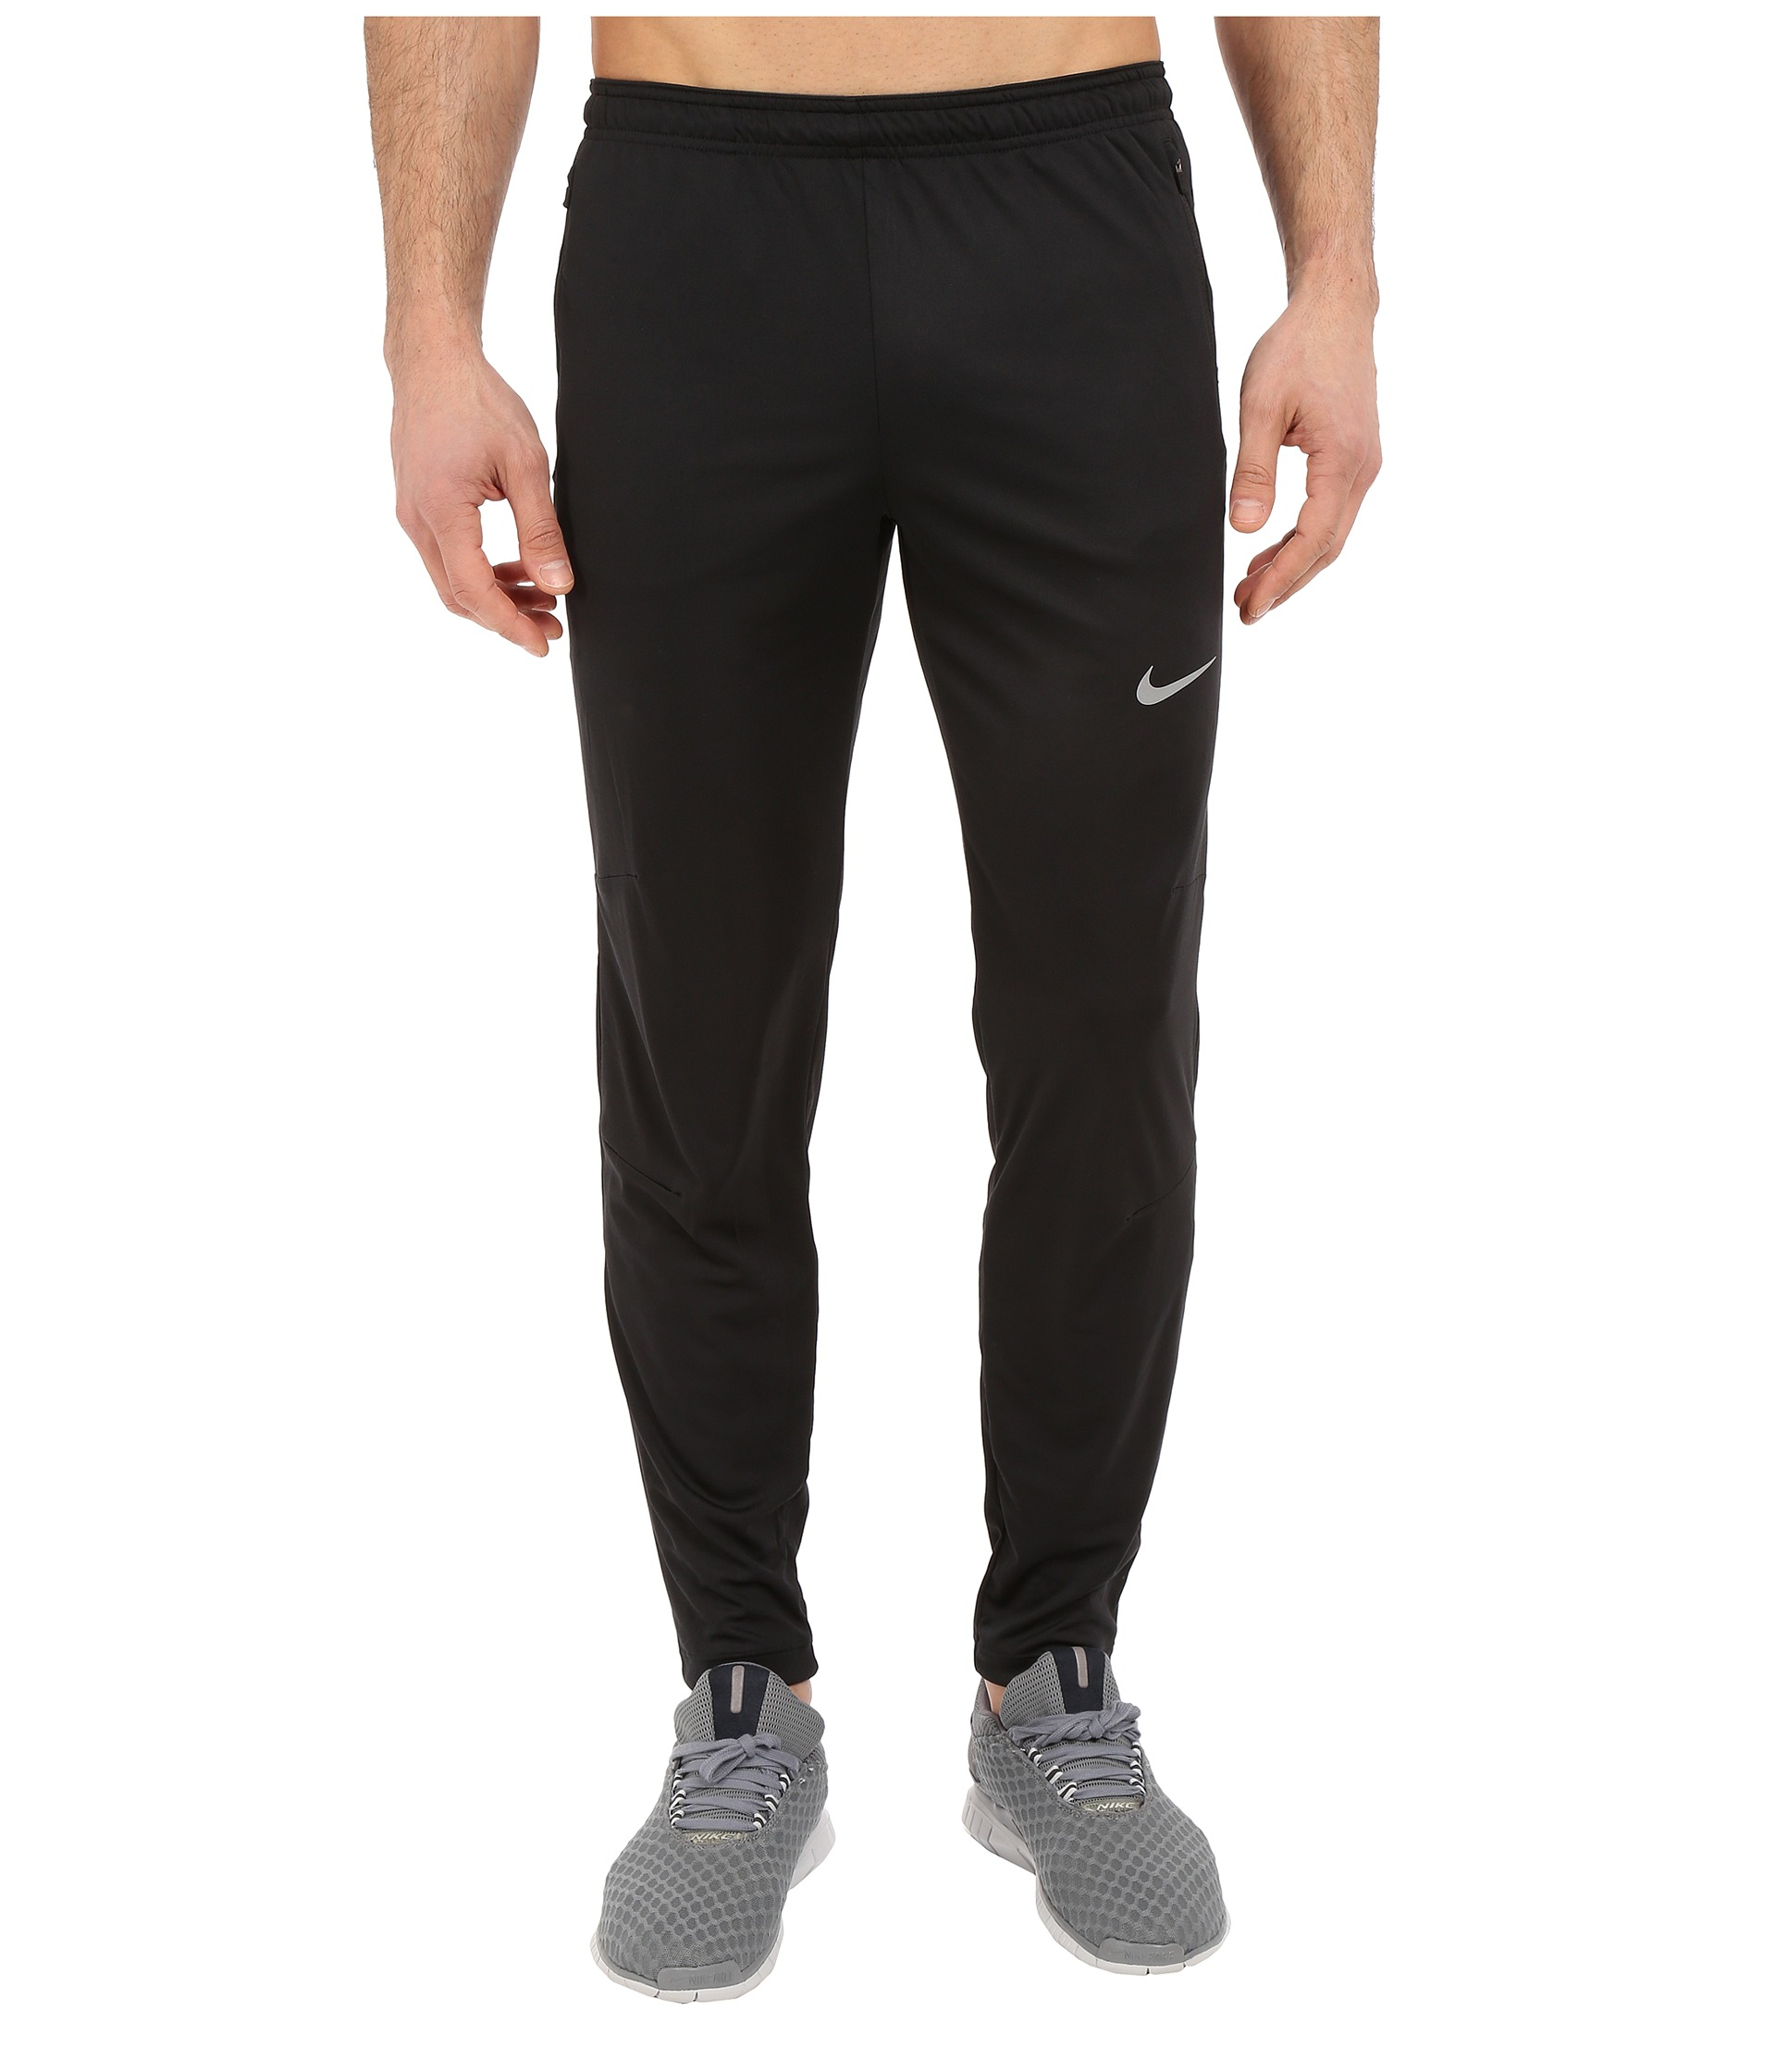 Nike Cash 2.0 Pant in Black for Men - Save 53% | Lyst